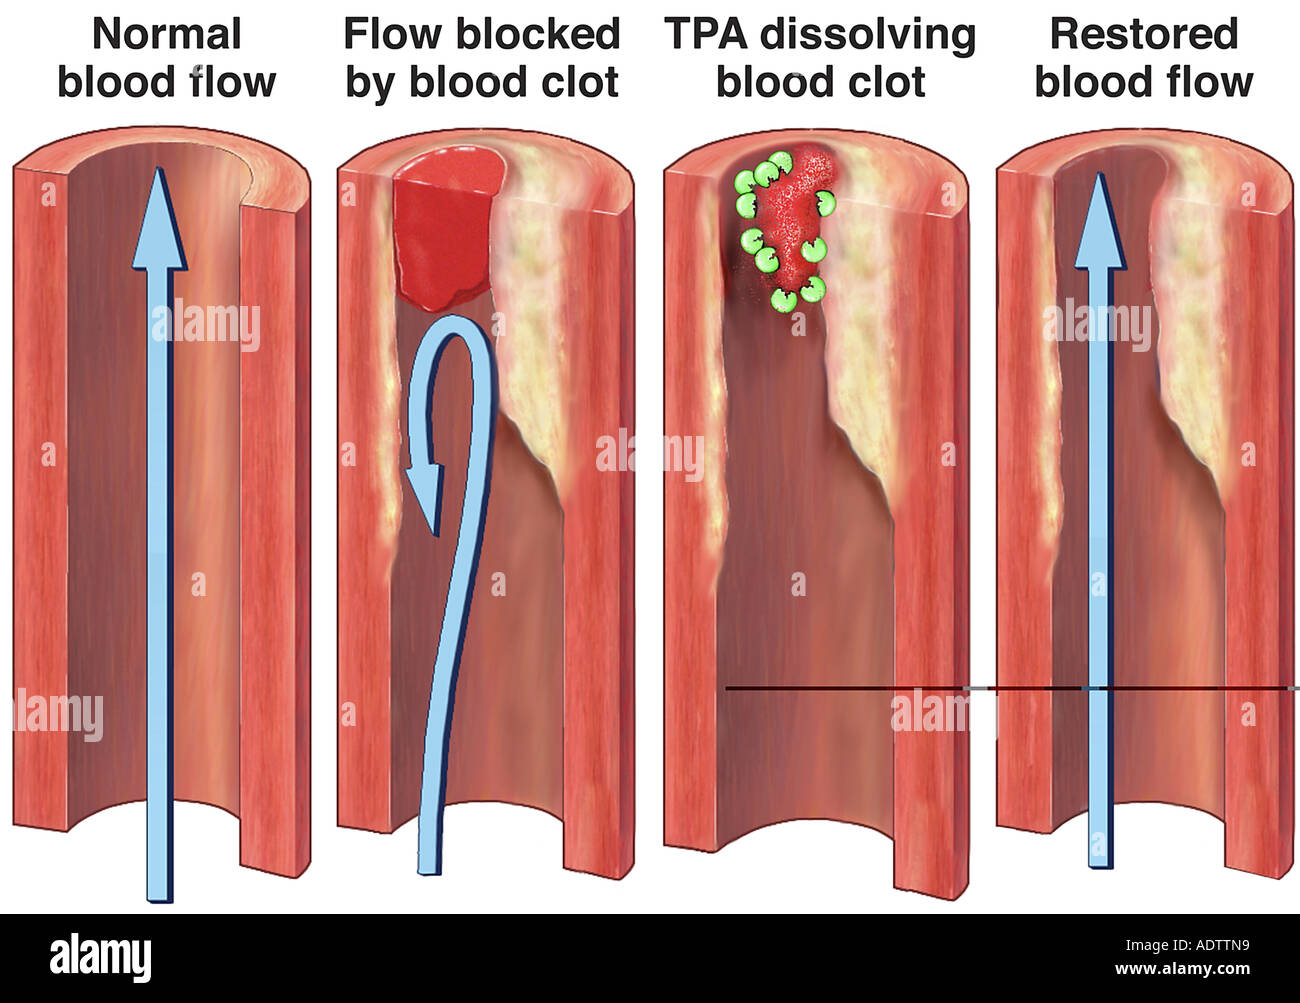 TPA Dissolving Blood Clot Stock Photo